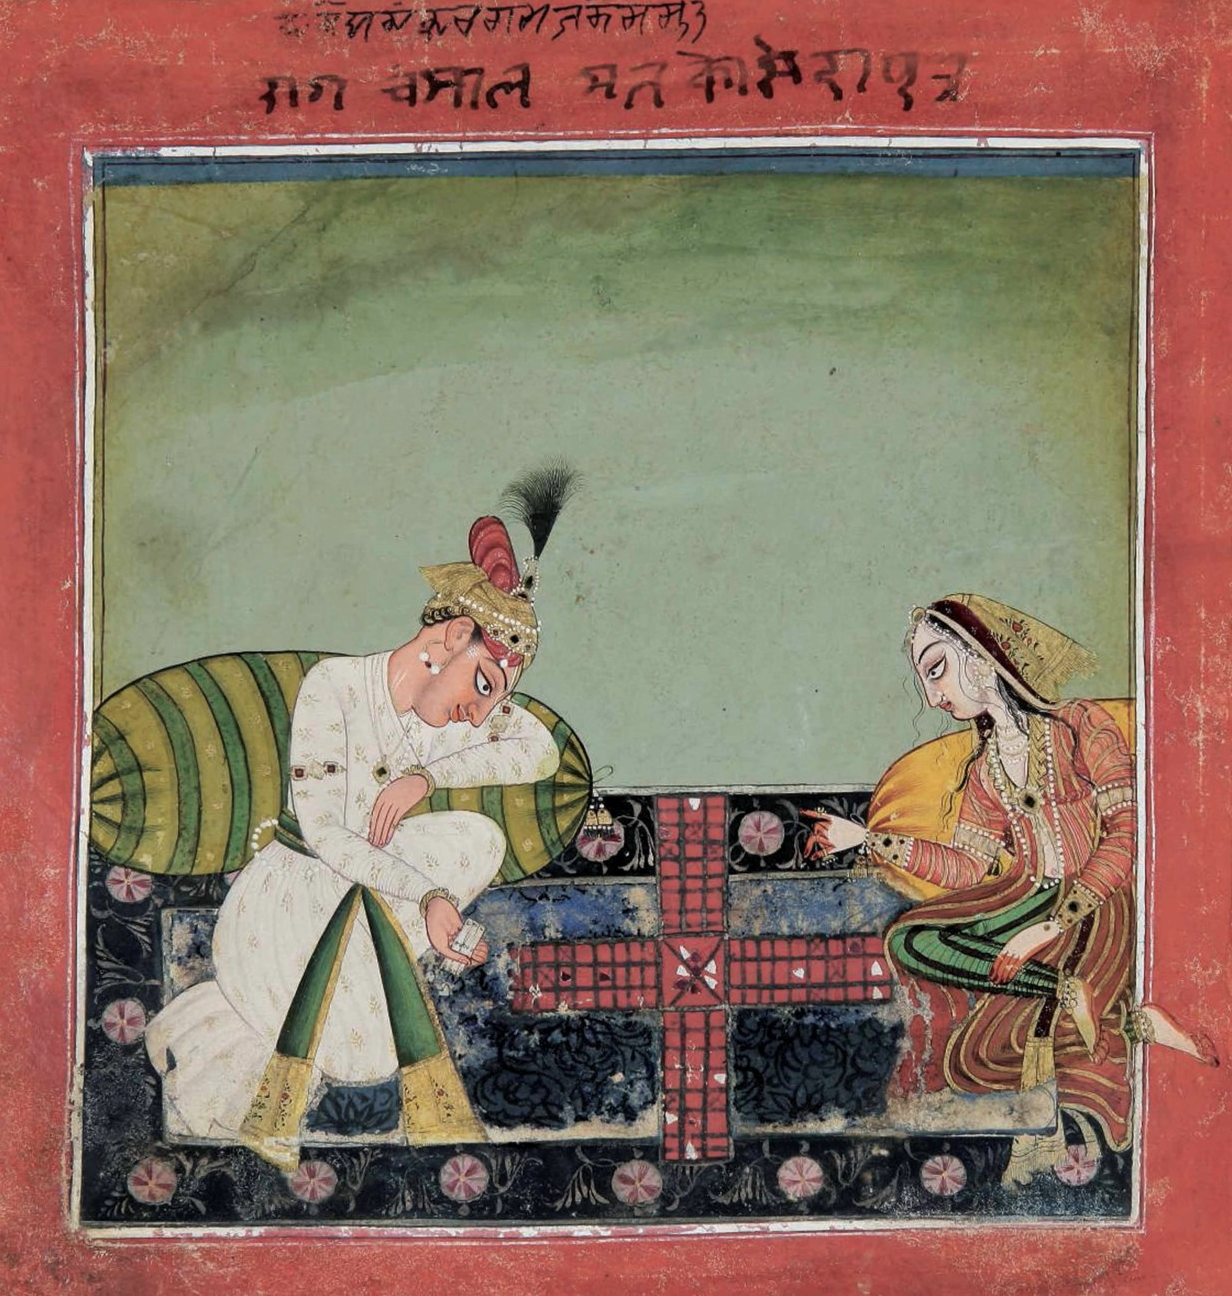 A folio from the “Tandan” Ragamala: Ragaputra Chandrakaya of Malkosa. BASOHLI, PAHARI REGION, NORTH INDIA, CIRCA 1700.